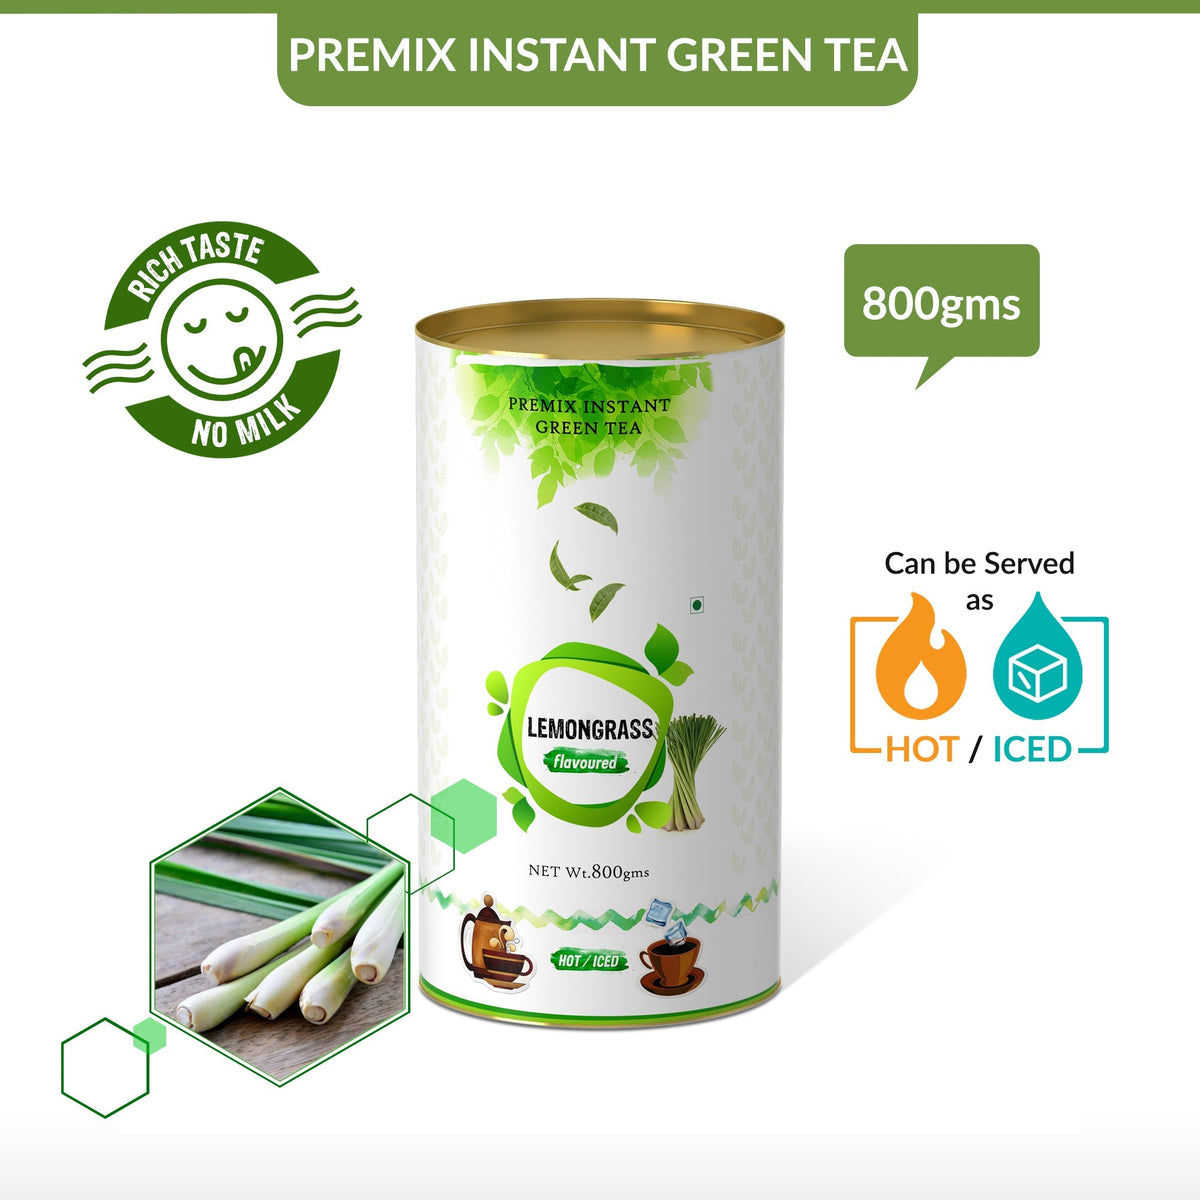 Lemongrass Flavored Instant Green Tea - 800 gms